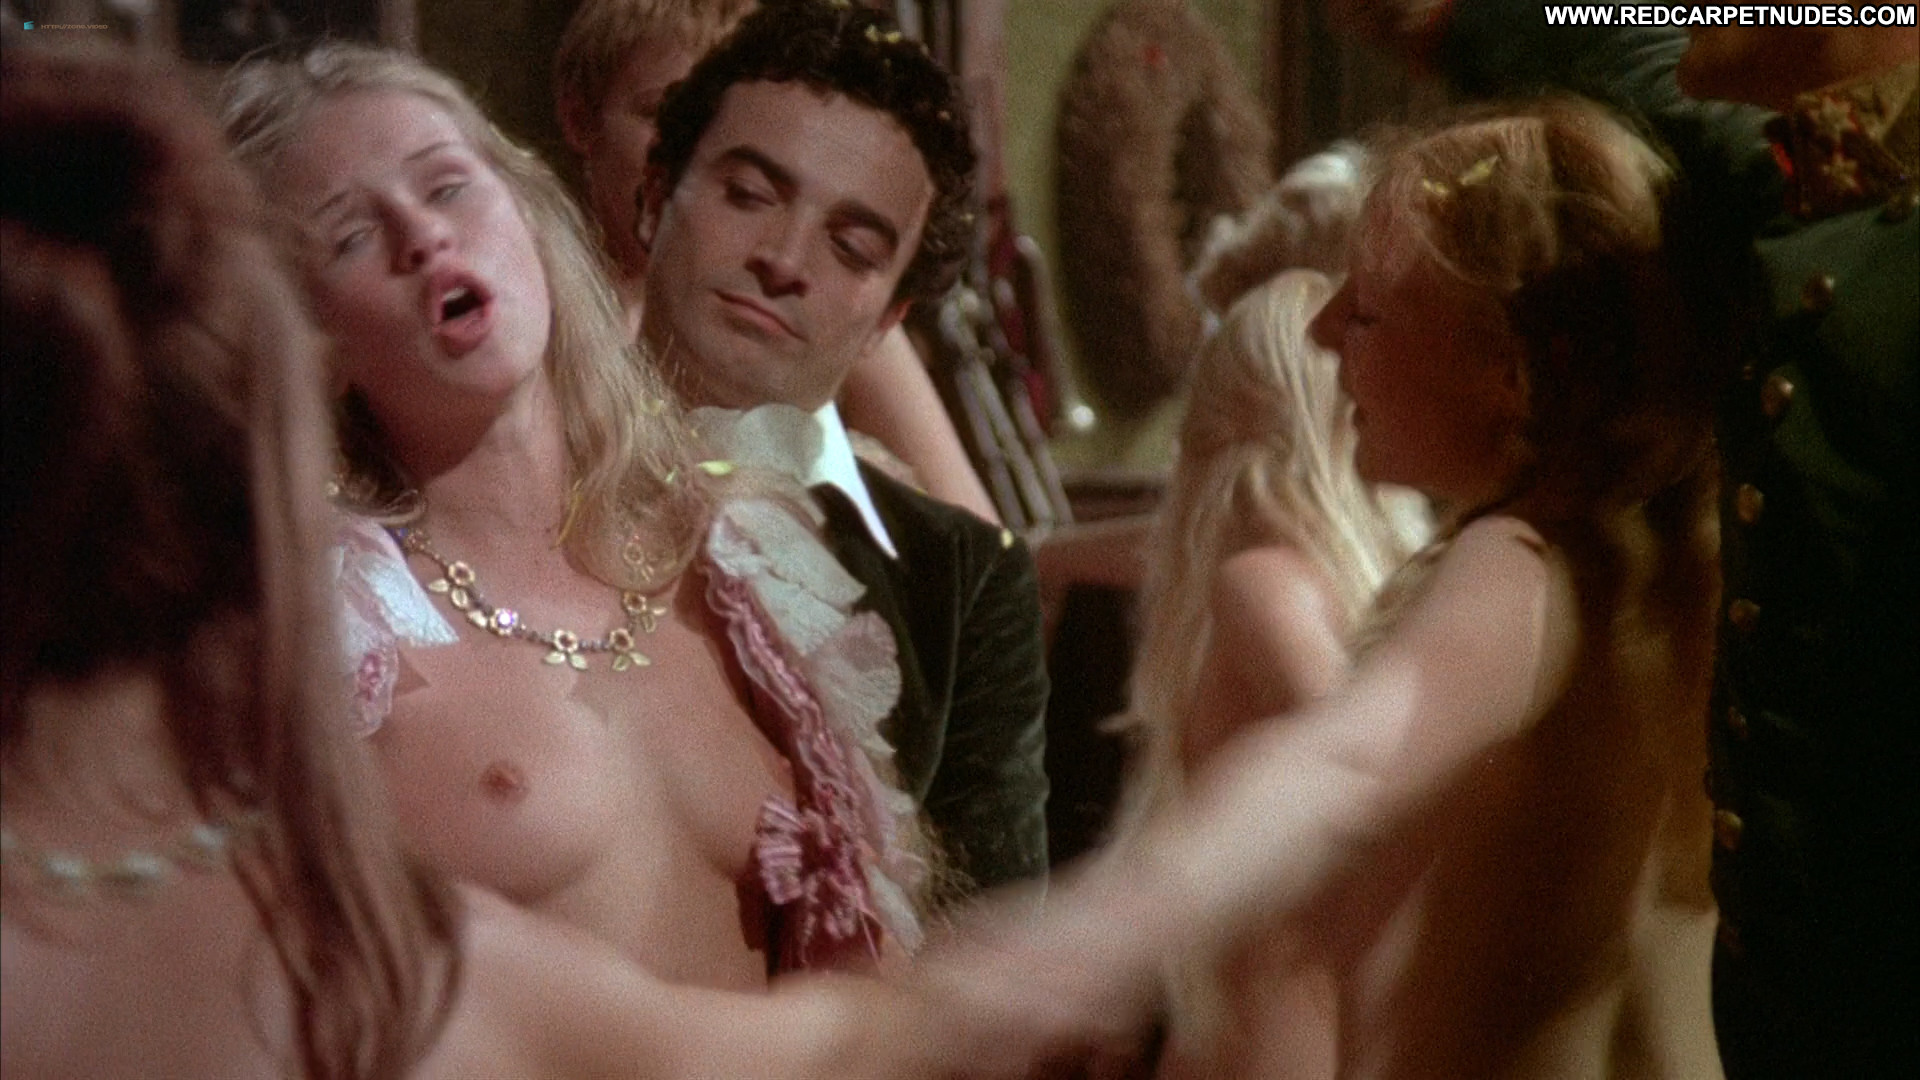 Teresa ann savoy nude in private vices public pleasures.